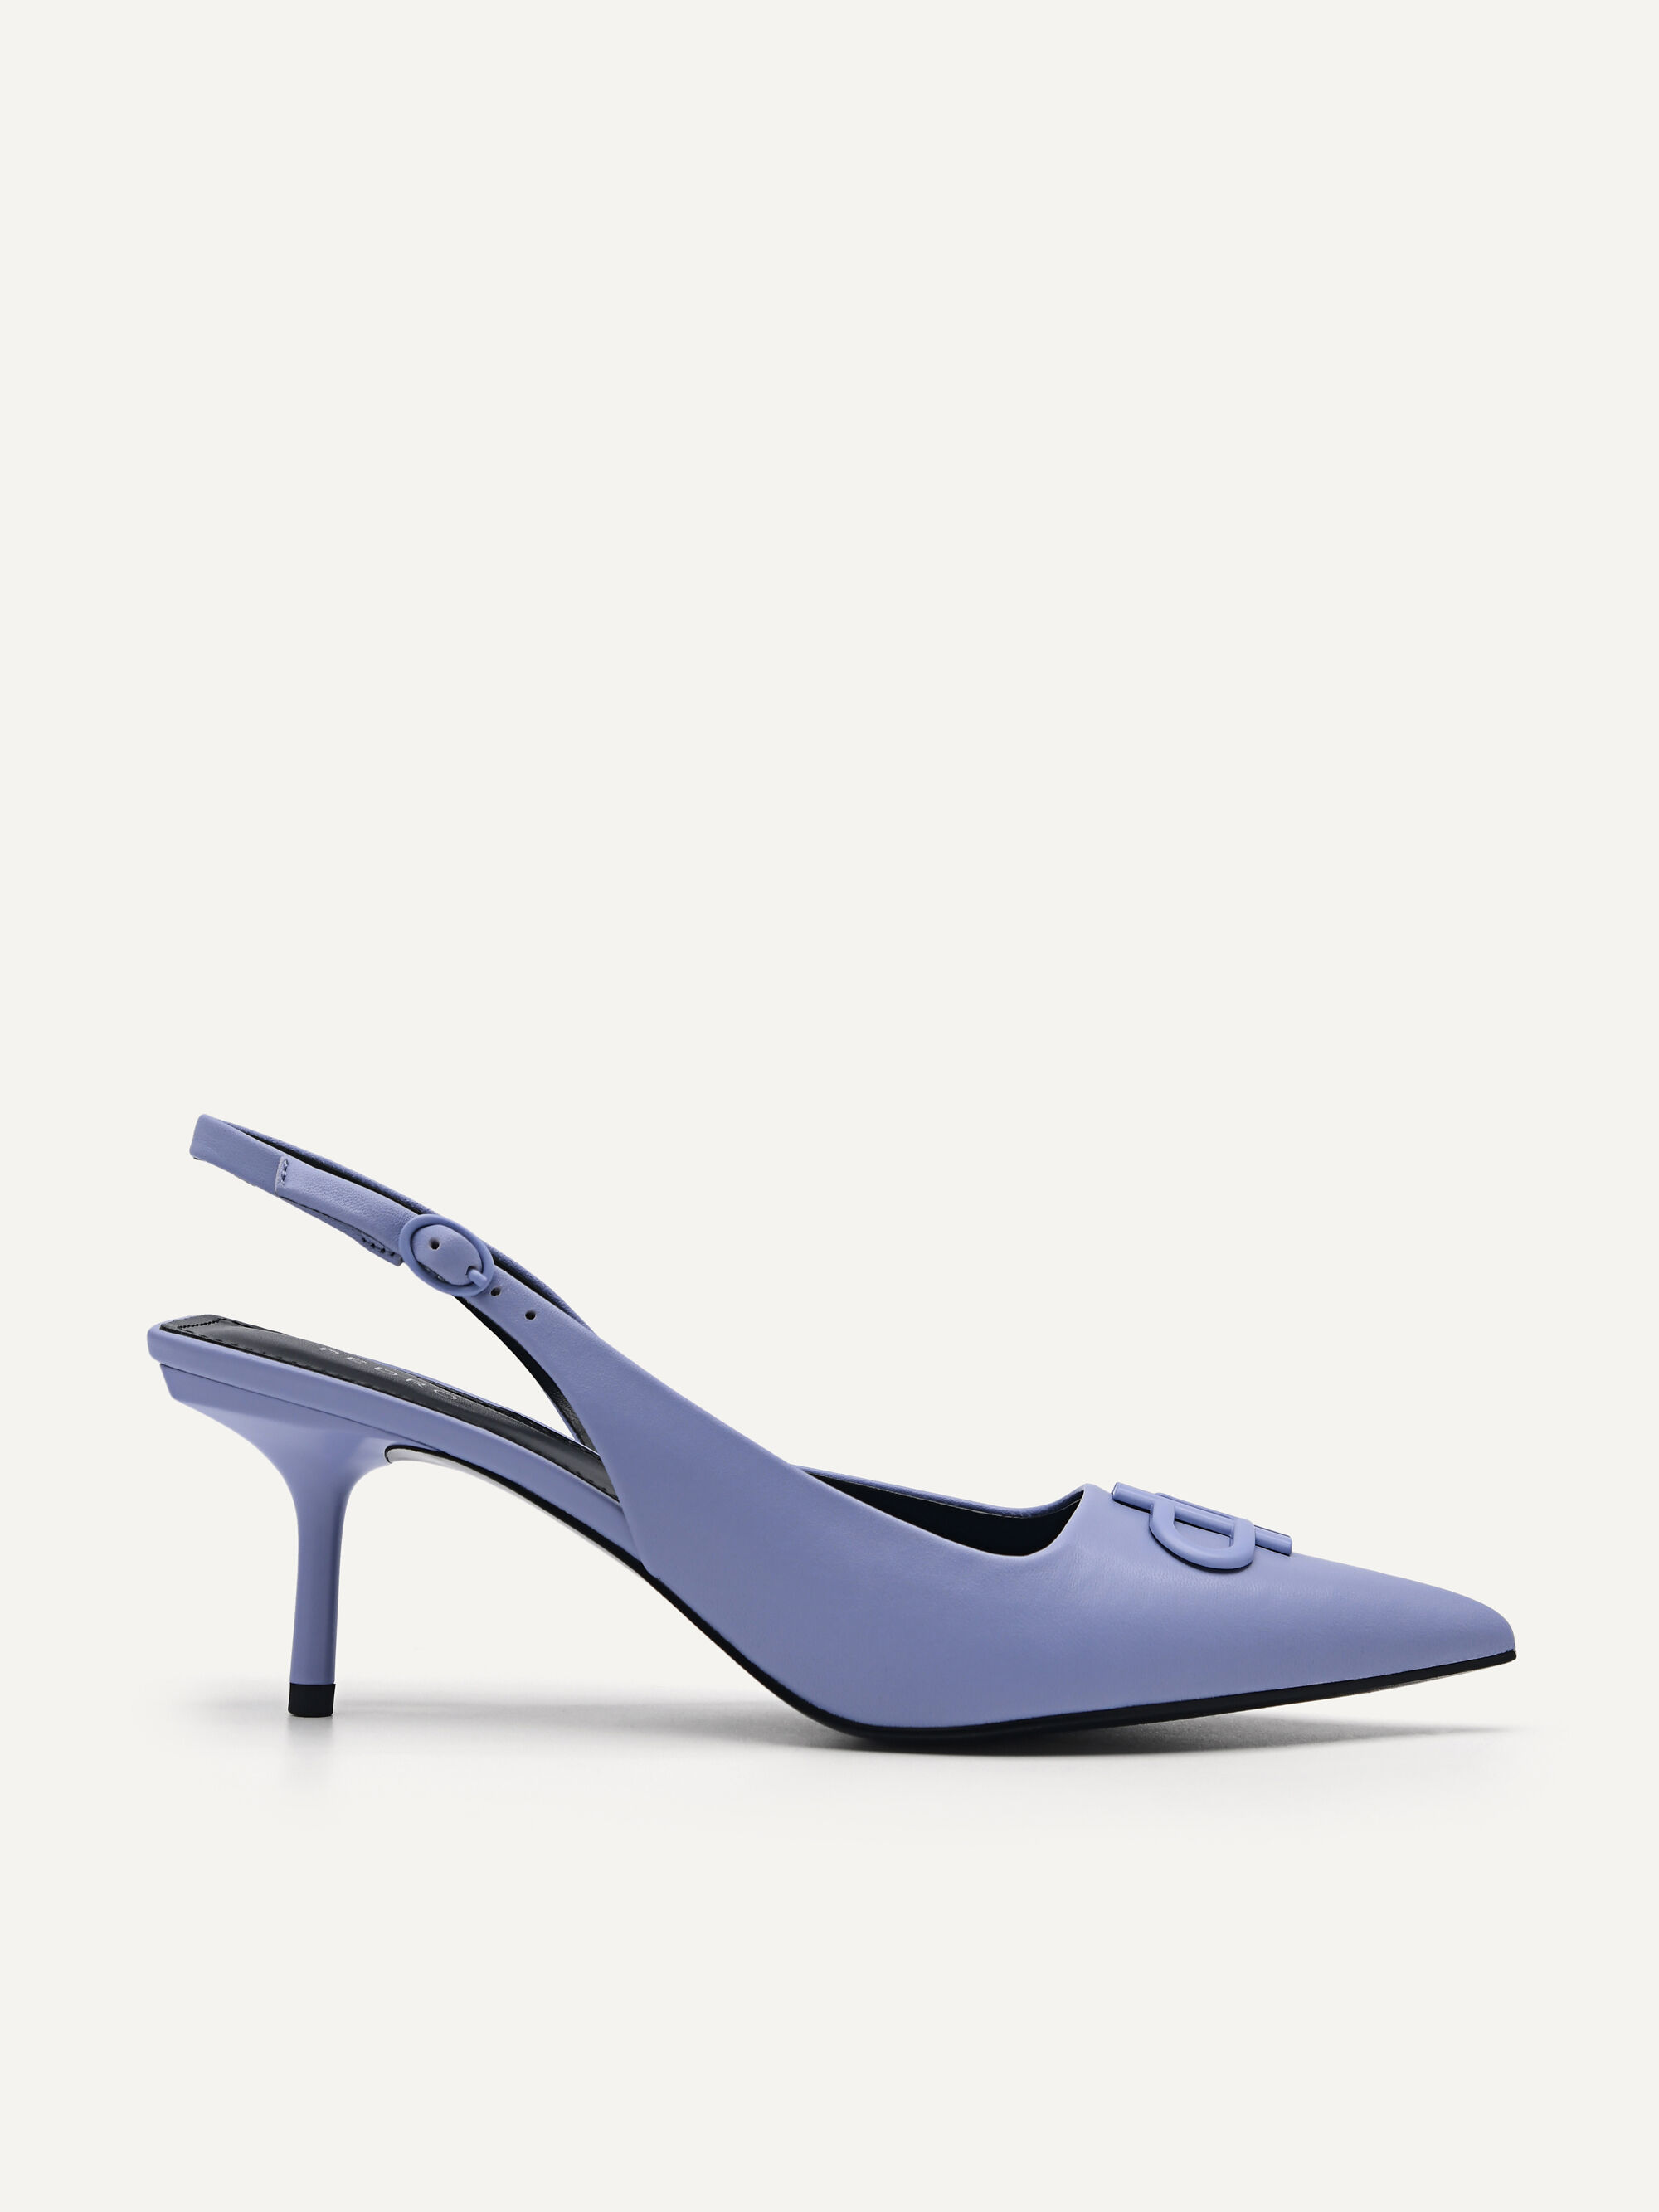 WOMEN FASHION Footwear Basic Blue 36                  EU NoName ankle boots discount 97% 